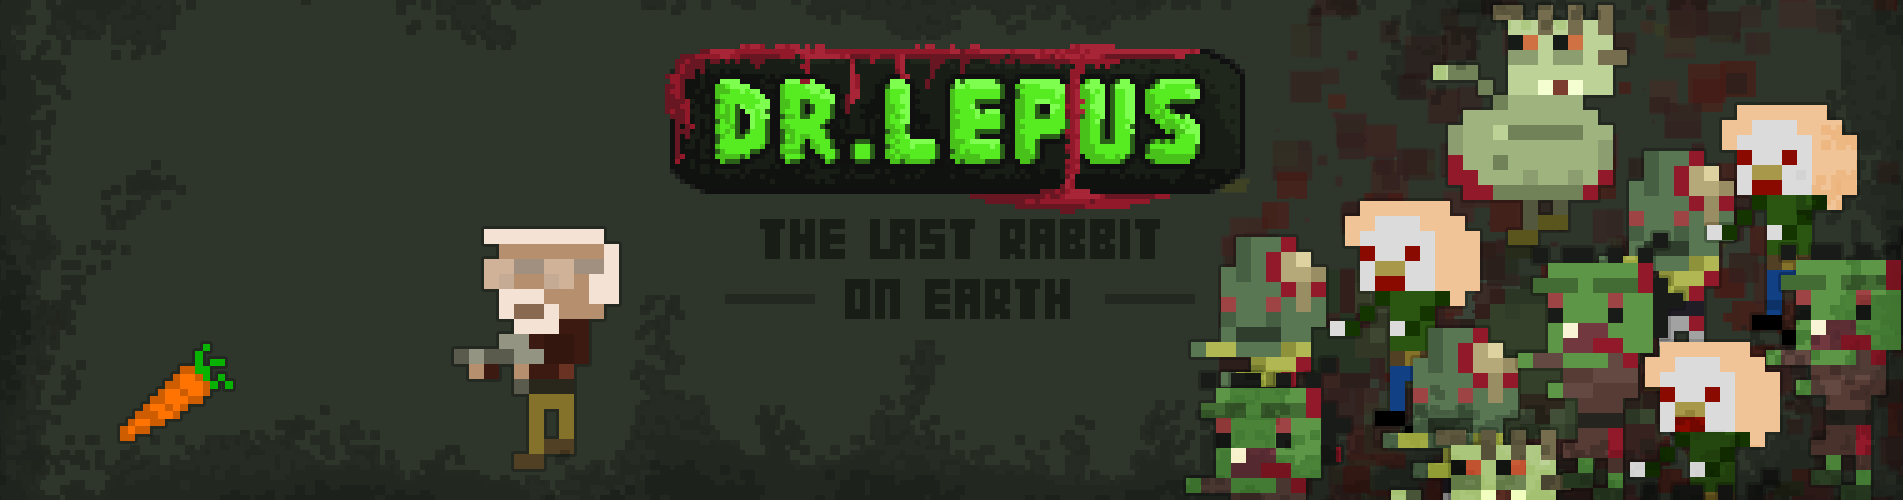 DR.LEPUS - The Last Rabbit on Earth